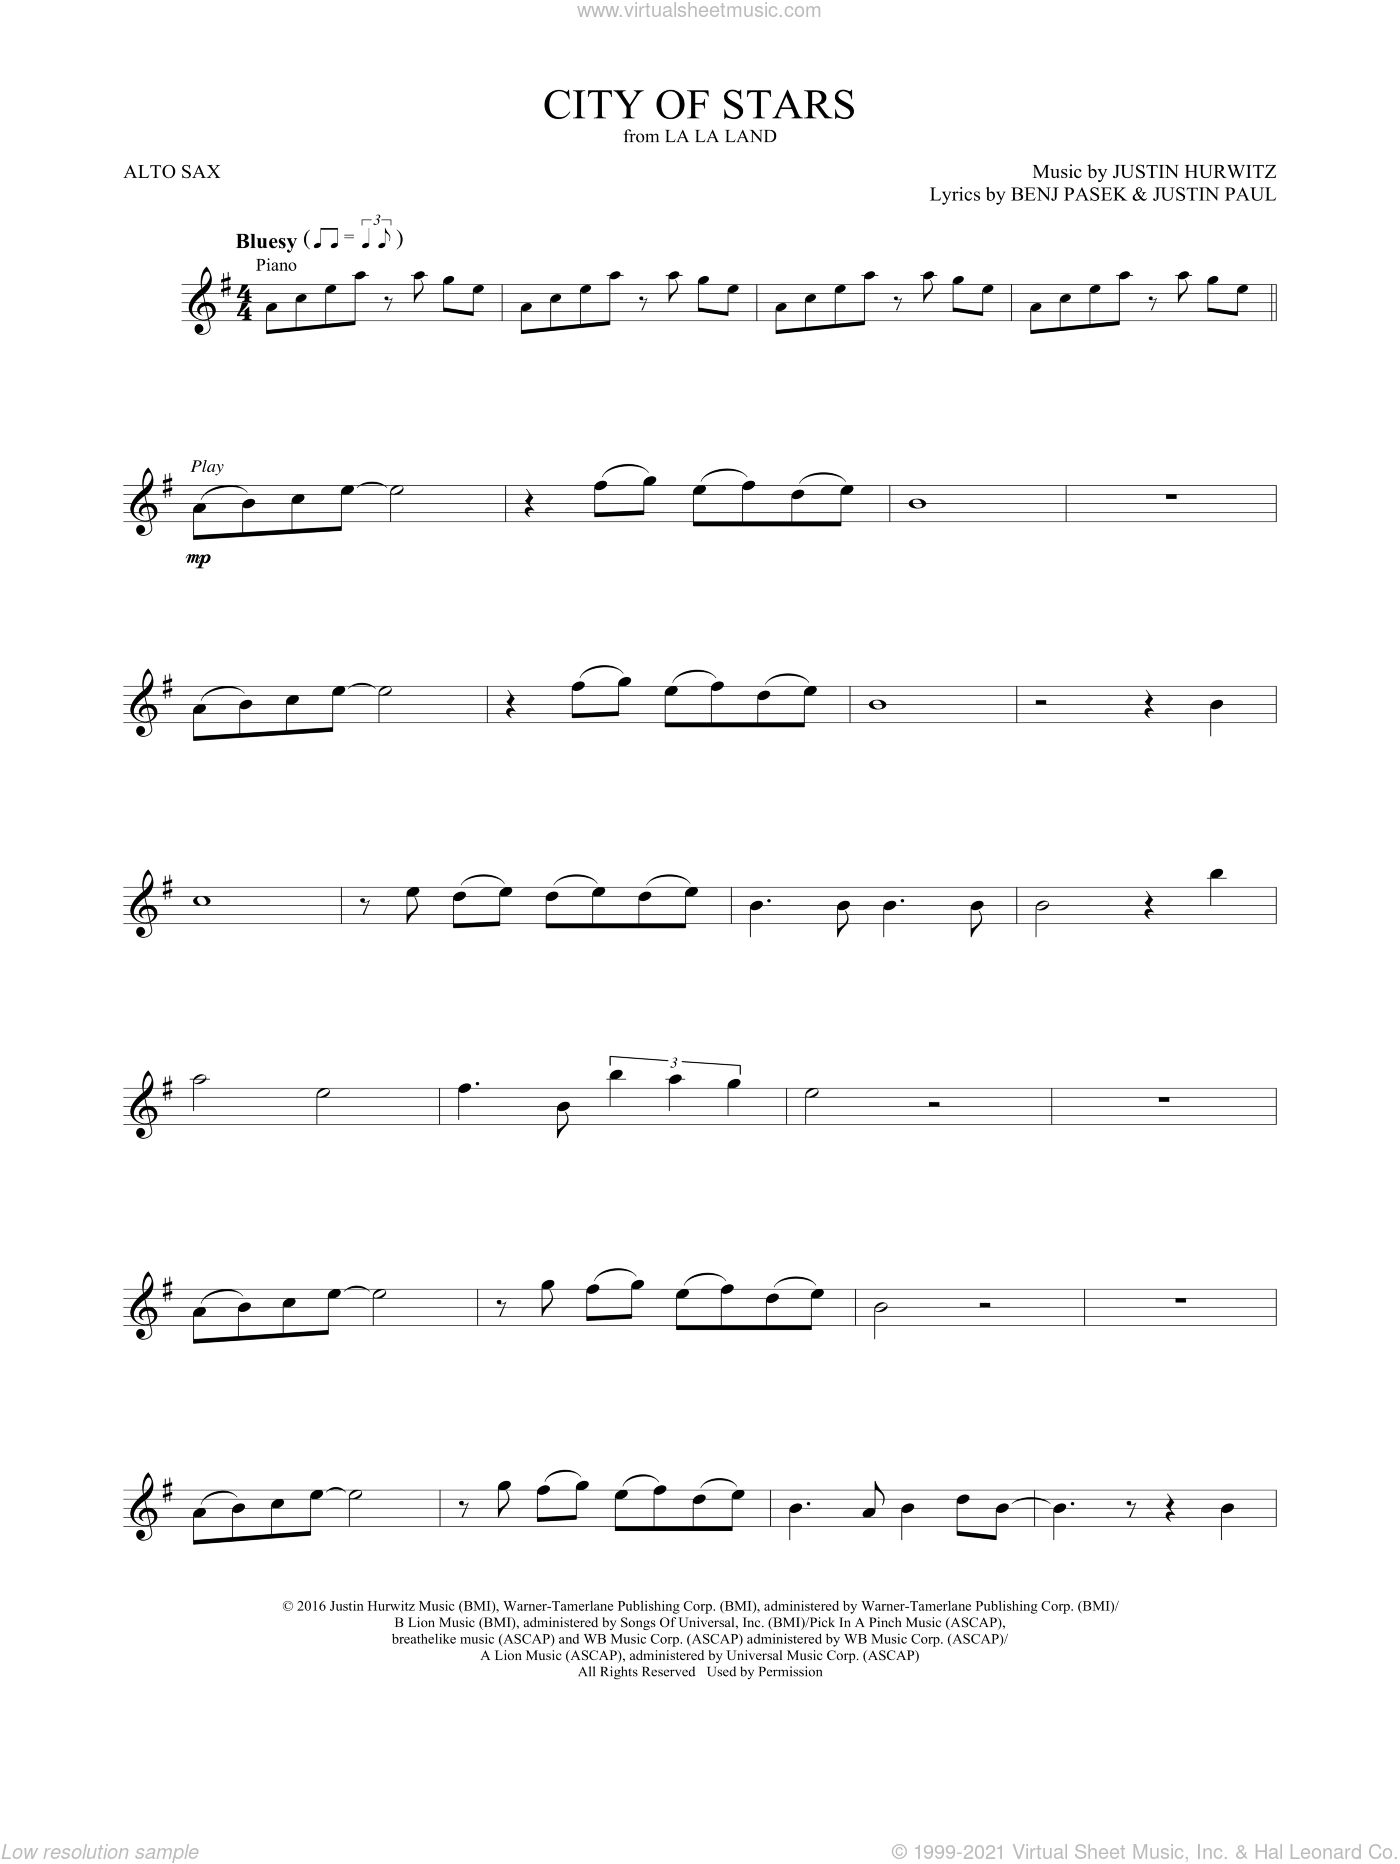 City of Stars (from La La Land) sheet music for alto saxophone solo